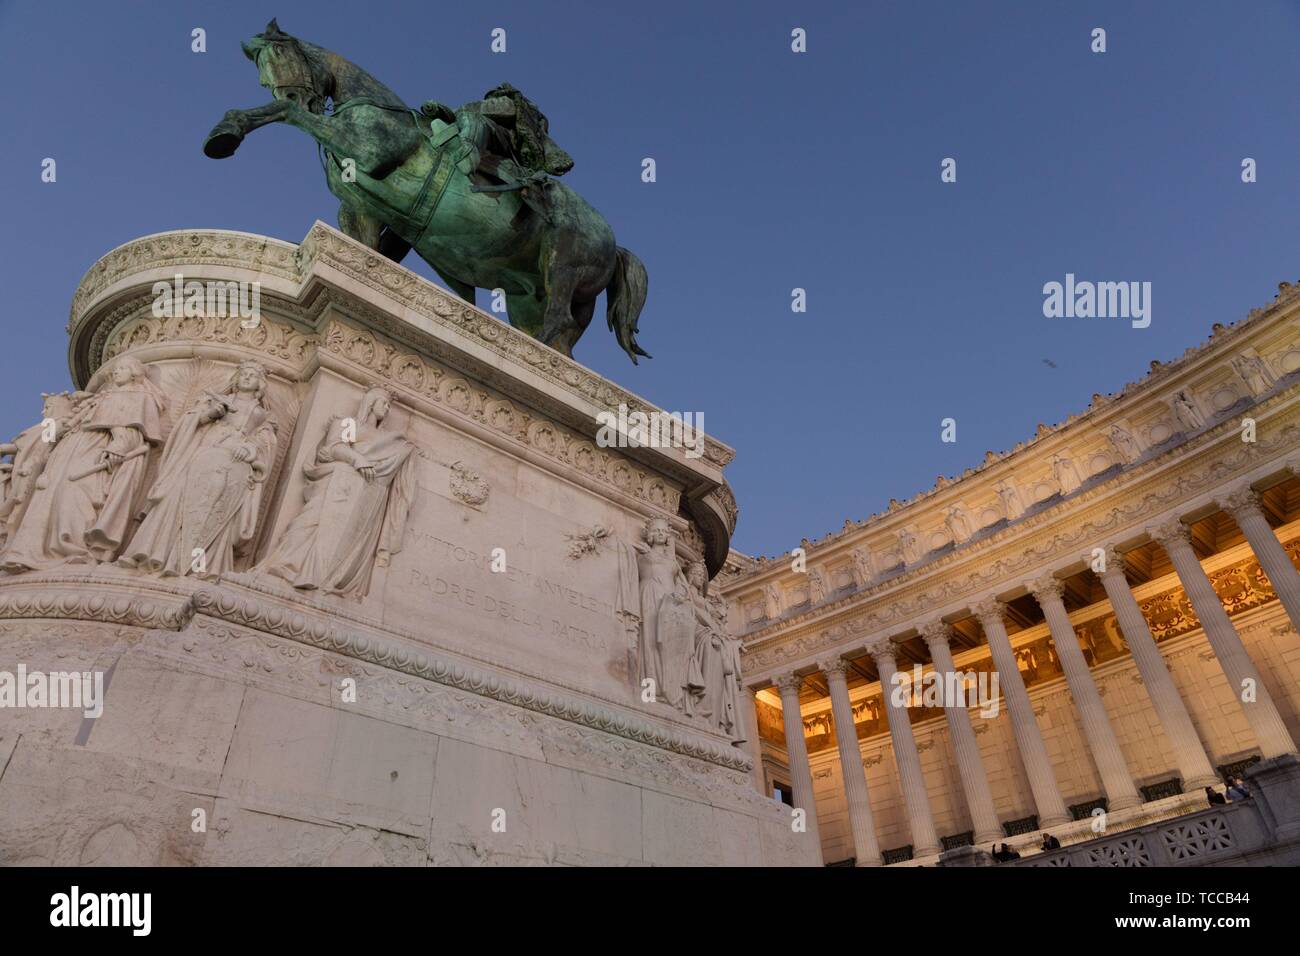 Vittoriale in its white splendor in Rome, Piazza Venezia, Italy. Stock Photo